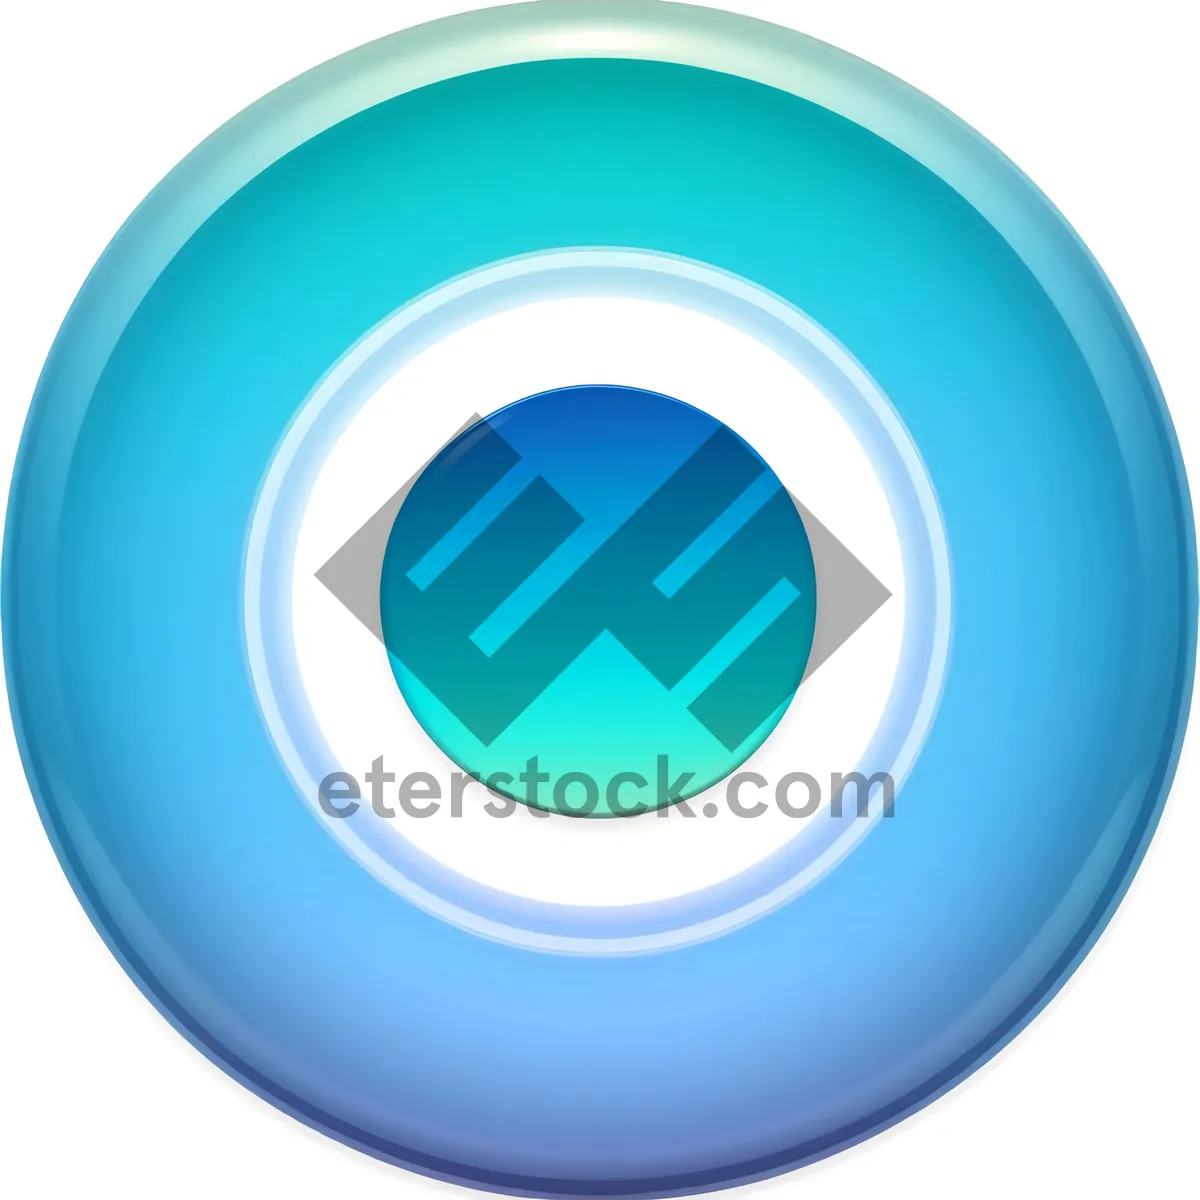 Picture of Web Button Set: Shiny Metallic Circle Icons